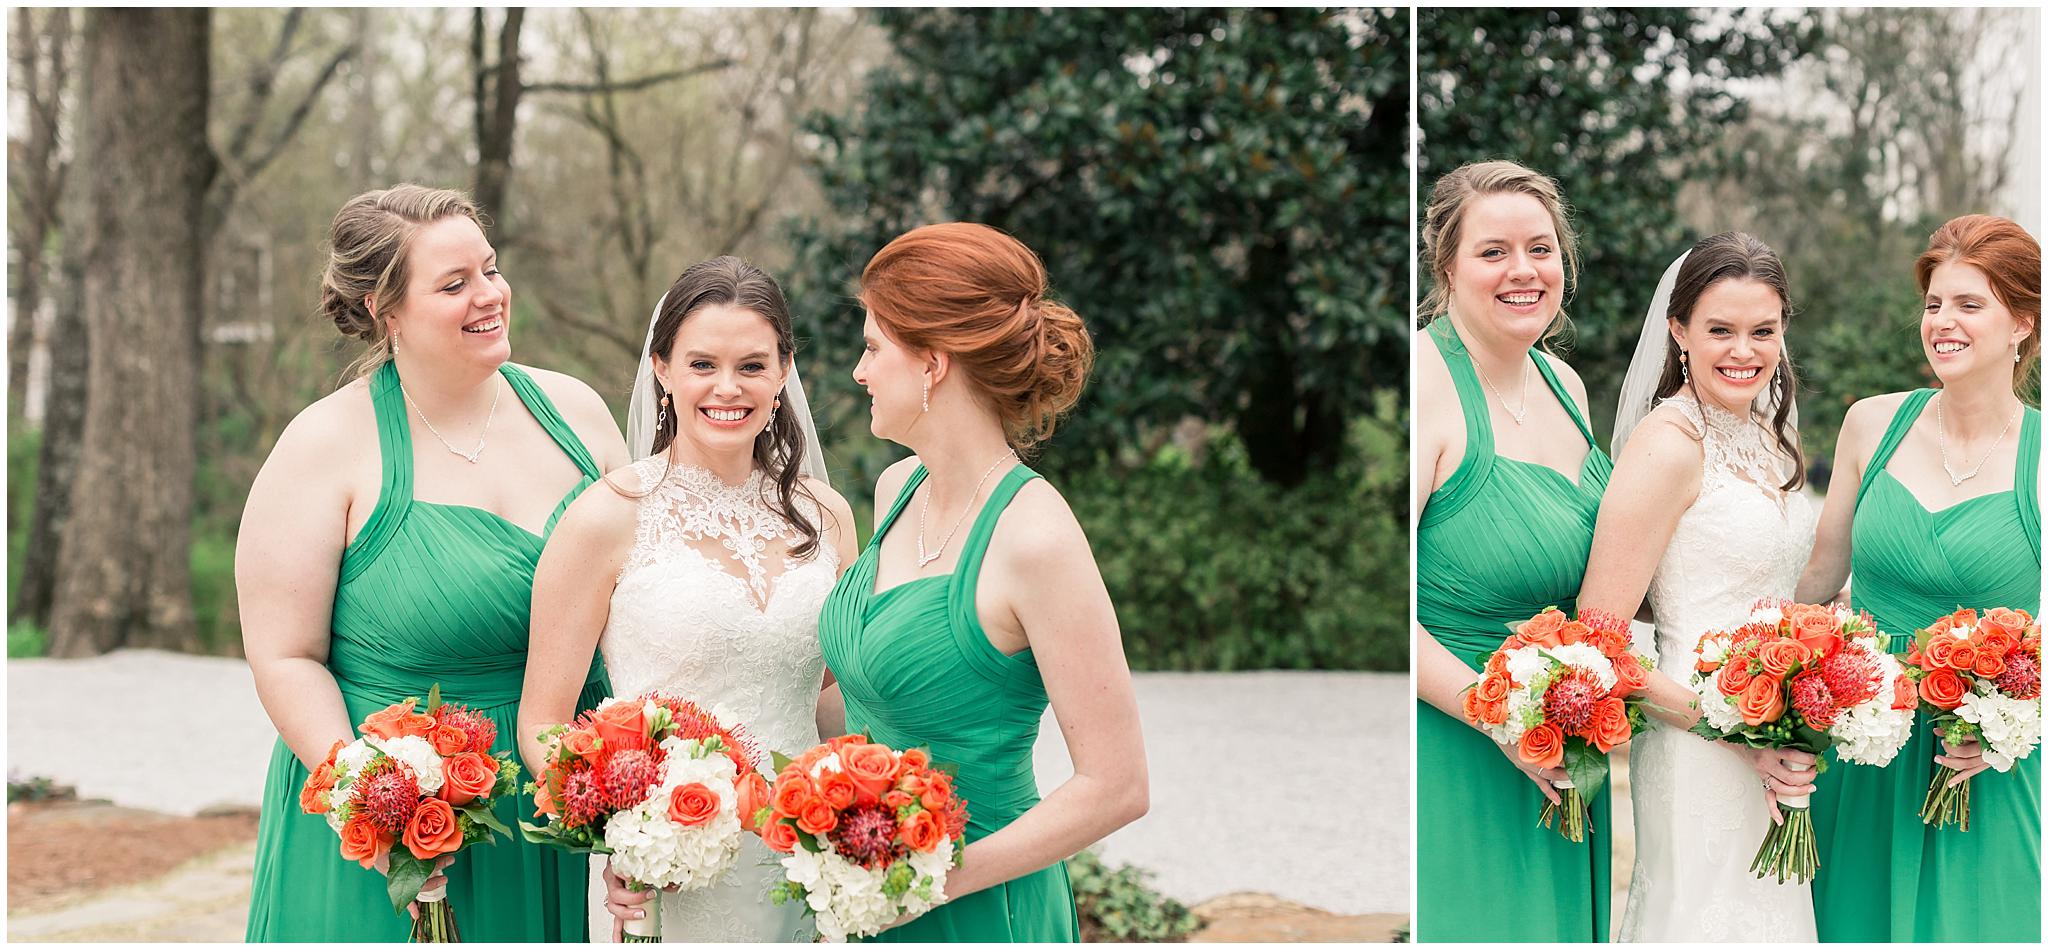 emerald green bridesmaids dress dresses orange flowers bride wedding pictures_0008.jpg